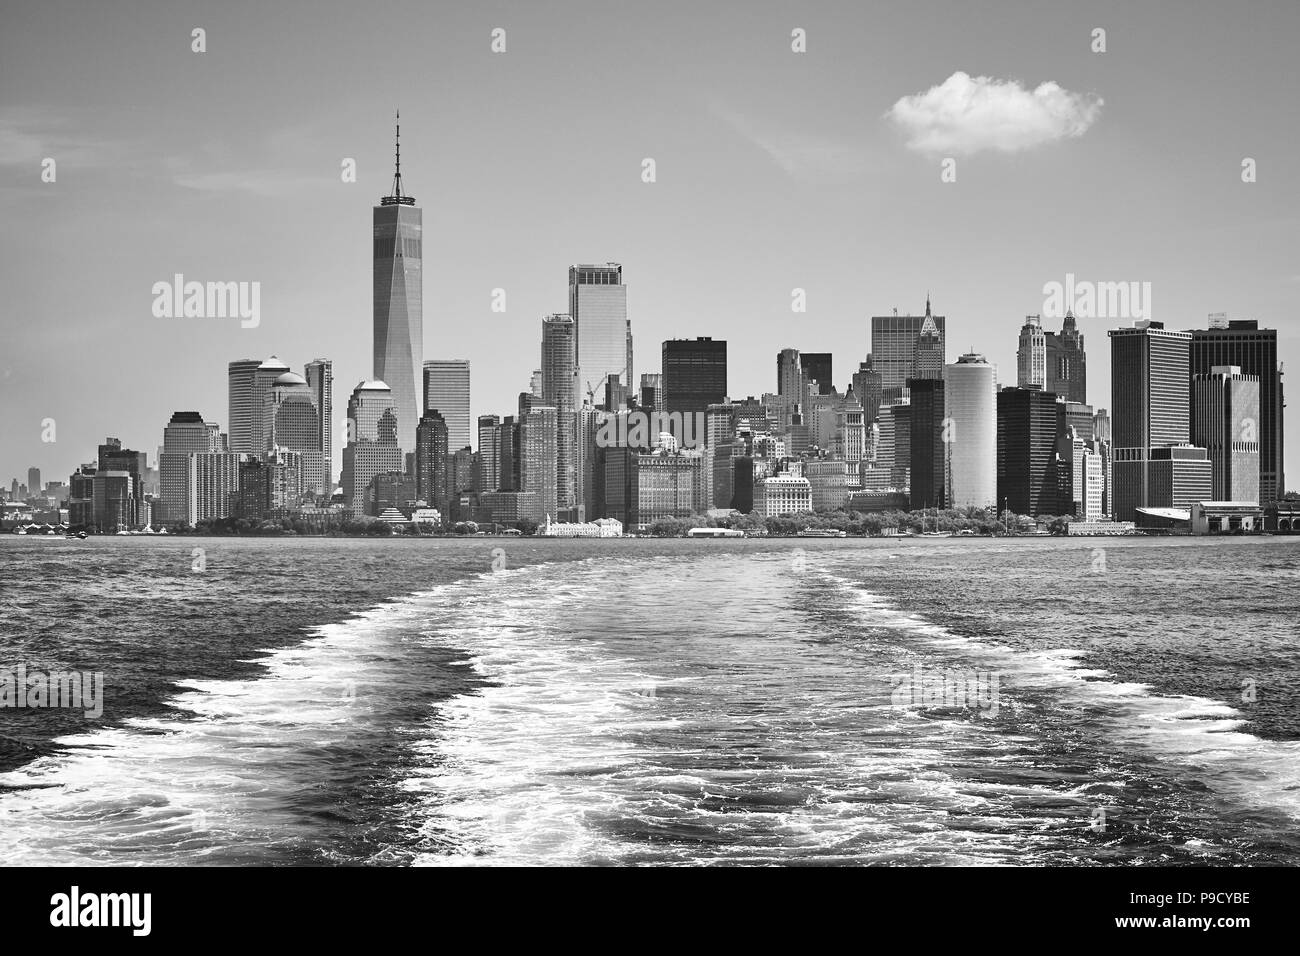 Lower Manhattan seen from Upper Bay, New York City, USA. Stock Photo